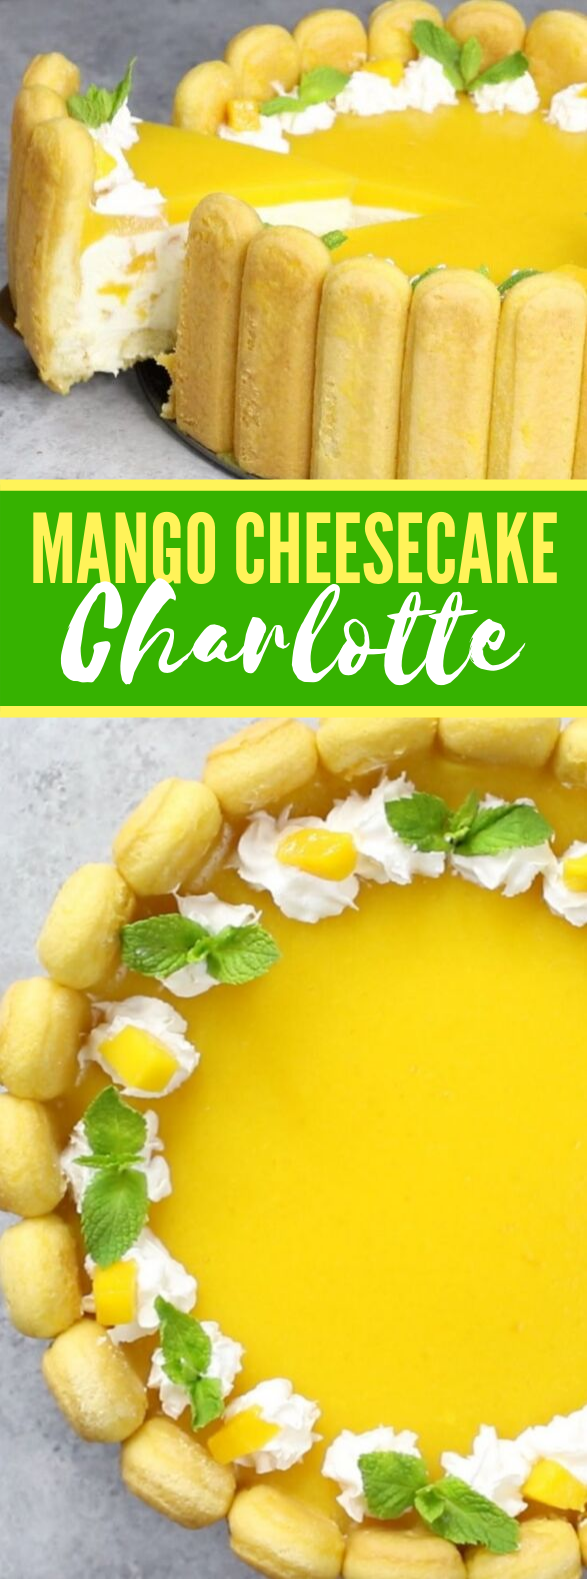 MANGO CHEESECAKE CHARLOTTE #desserts #cake